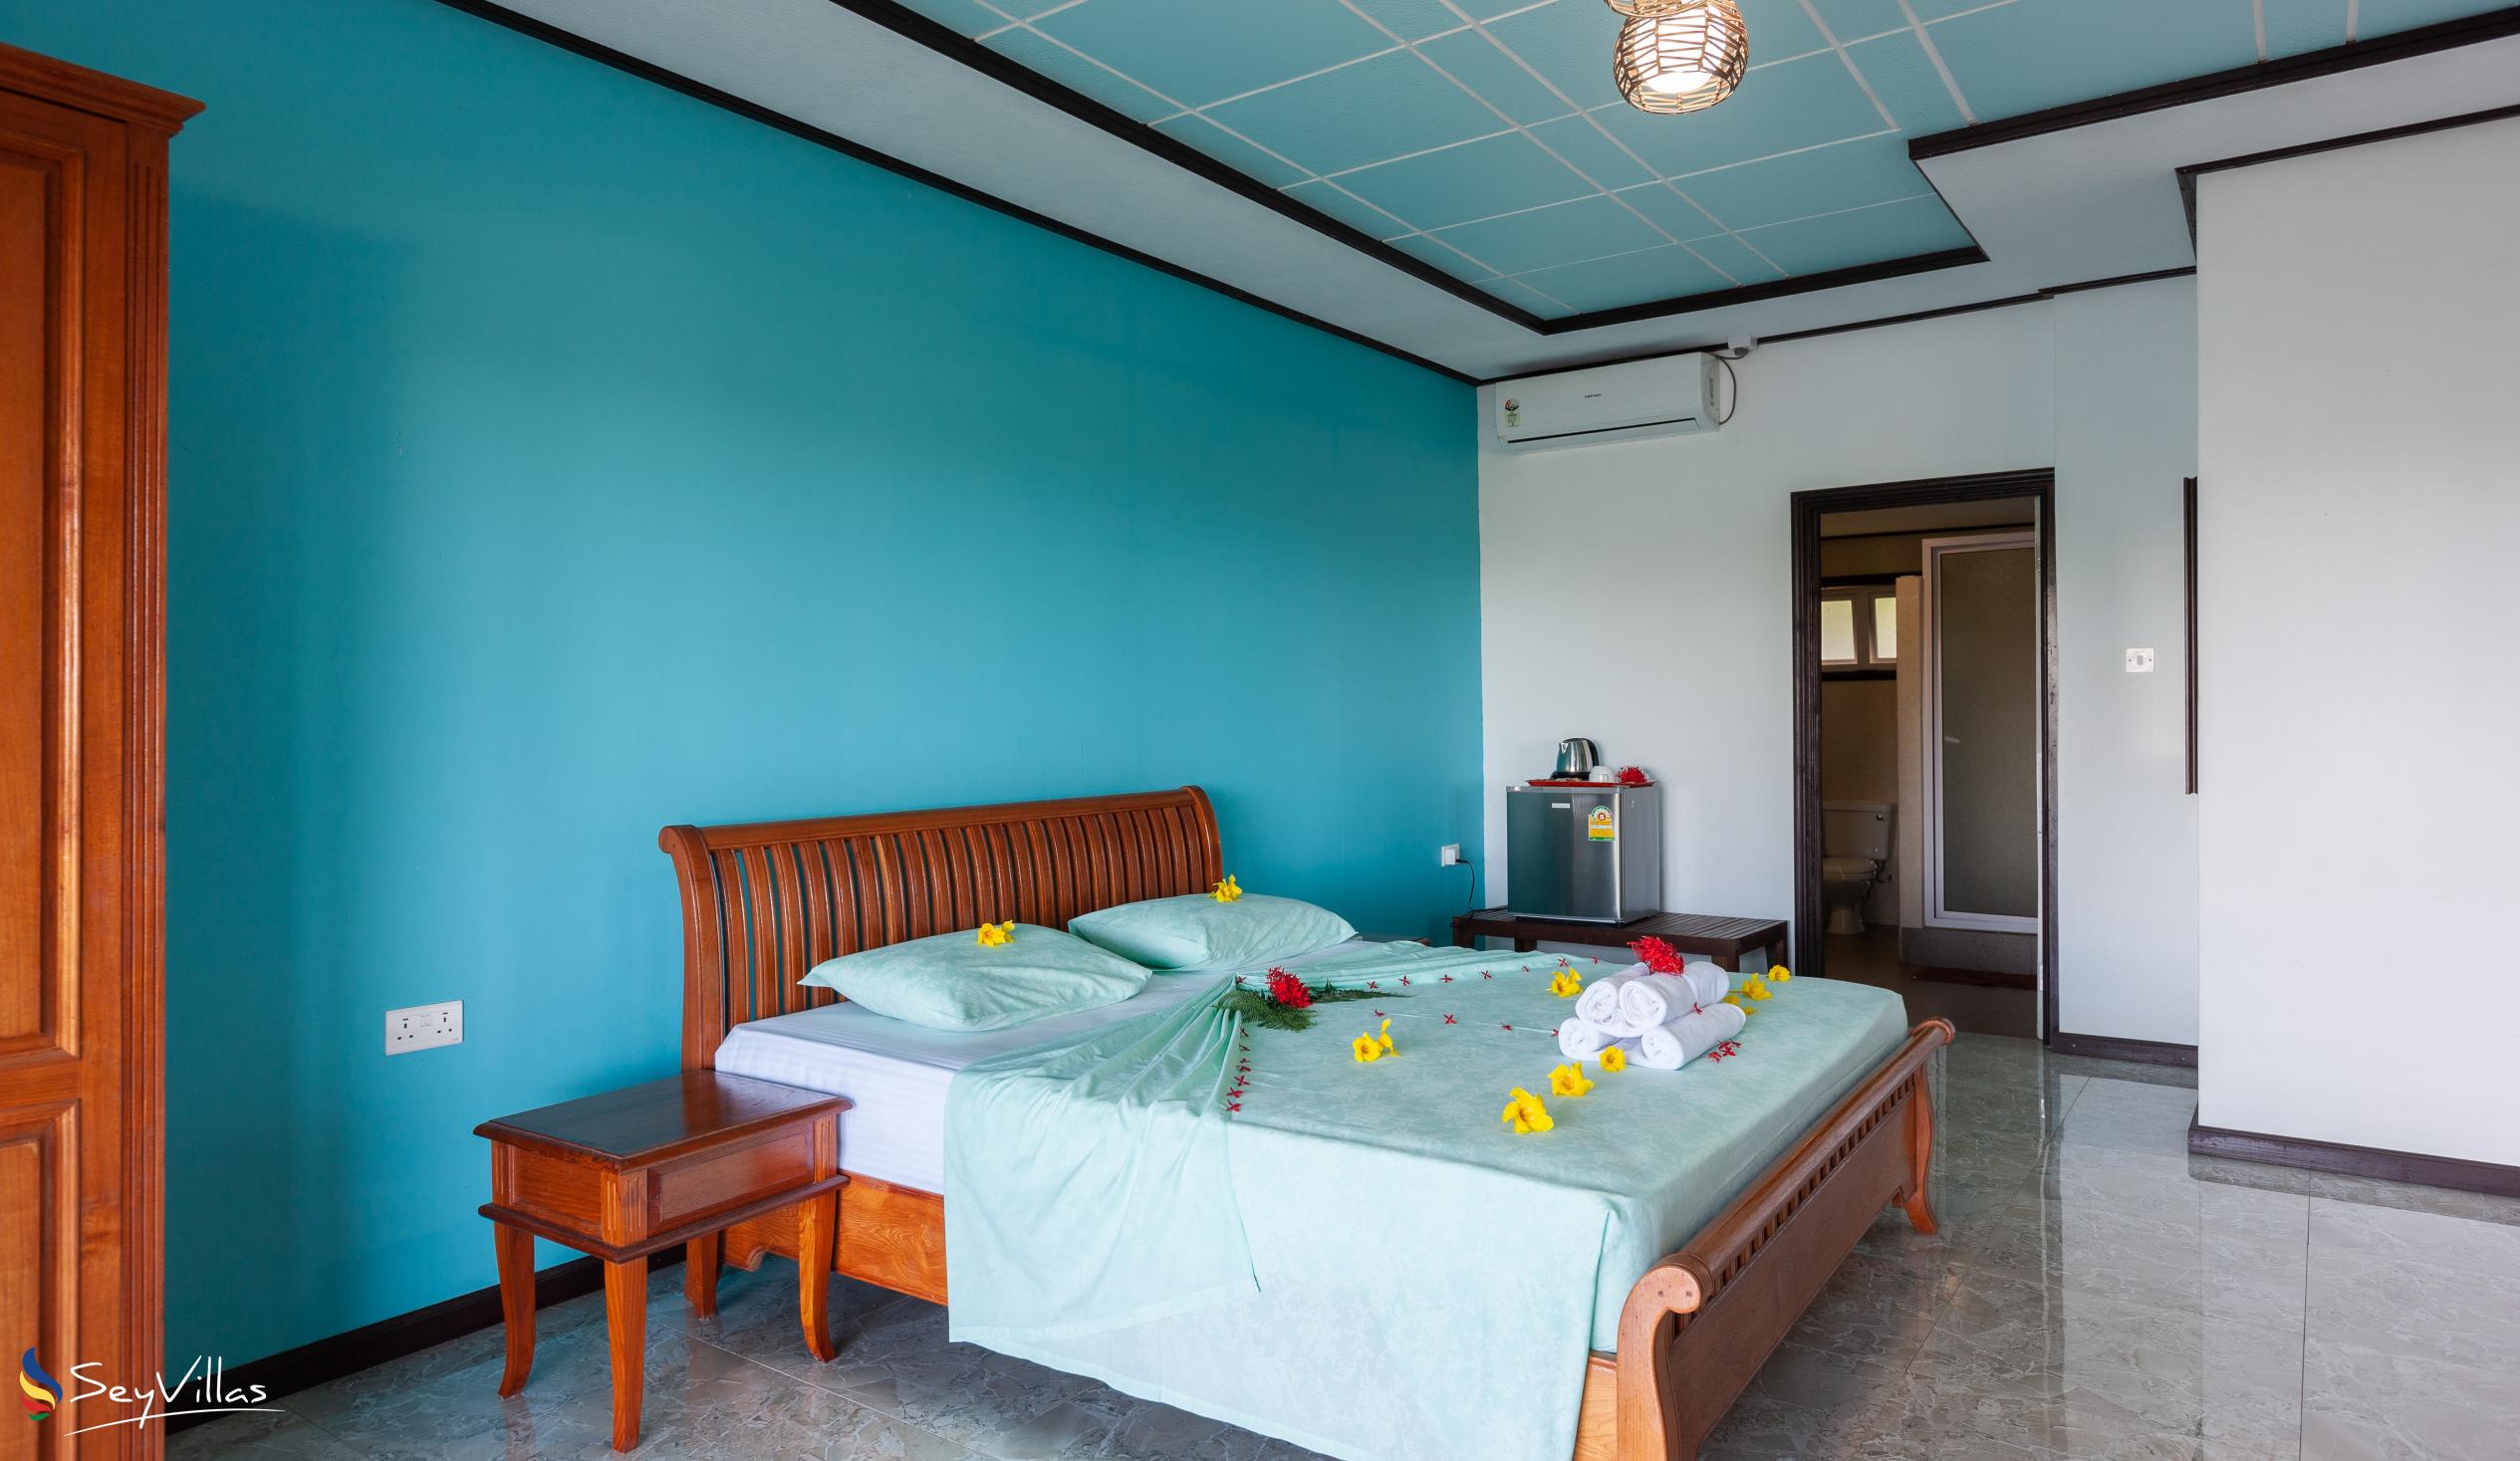 Photo 32: Villa Hortensia - Hortensia Standard Room - La Digue (Seychelles)